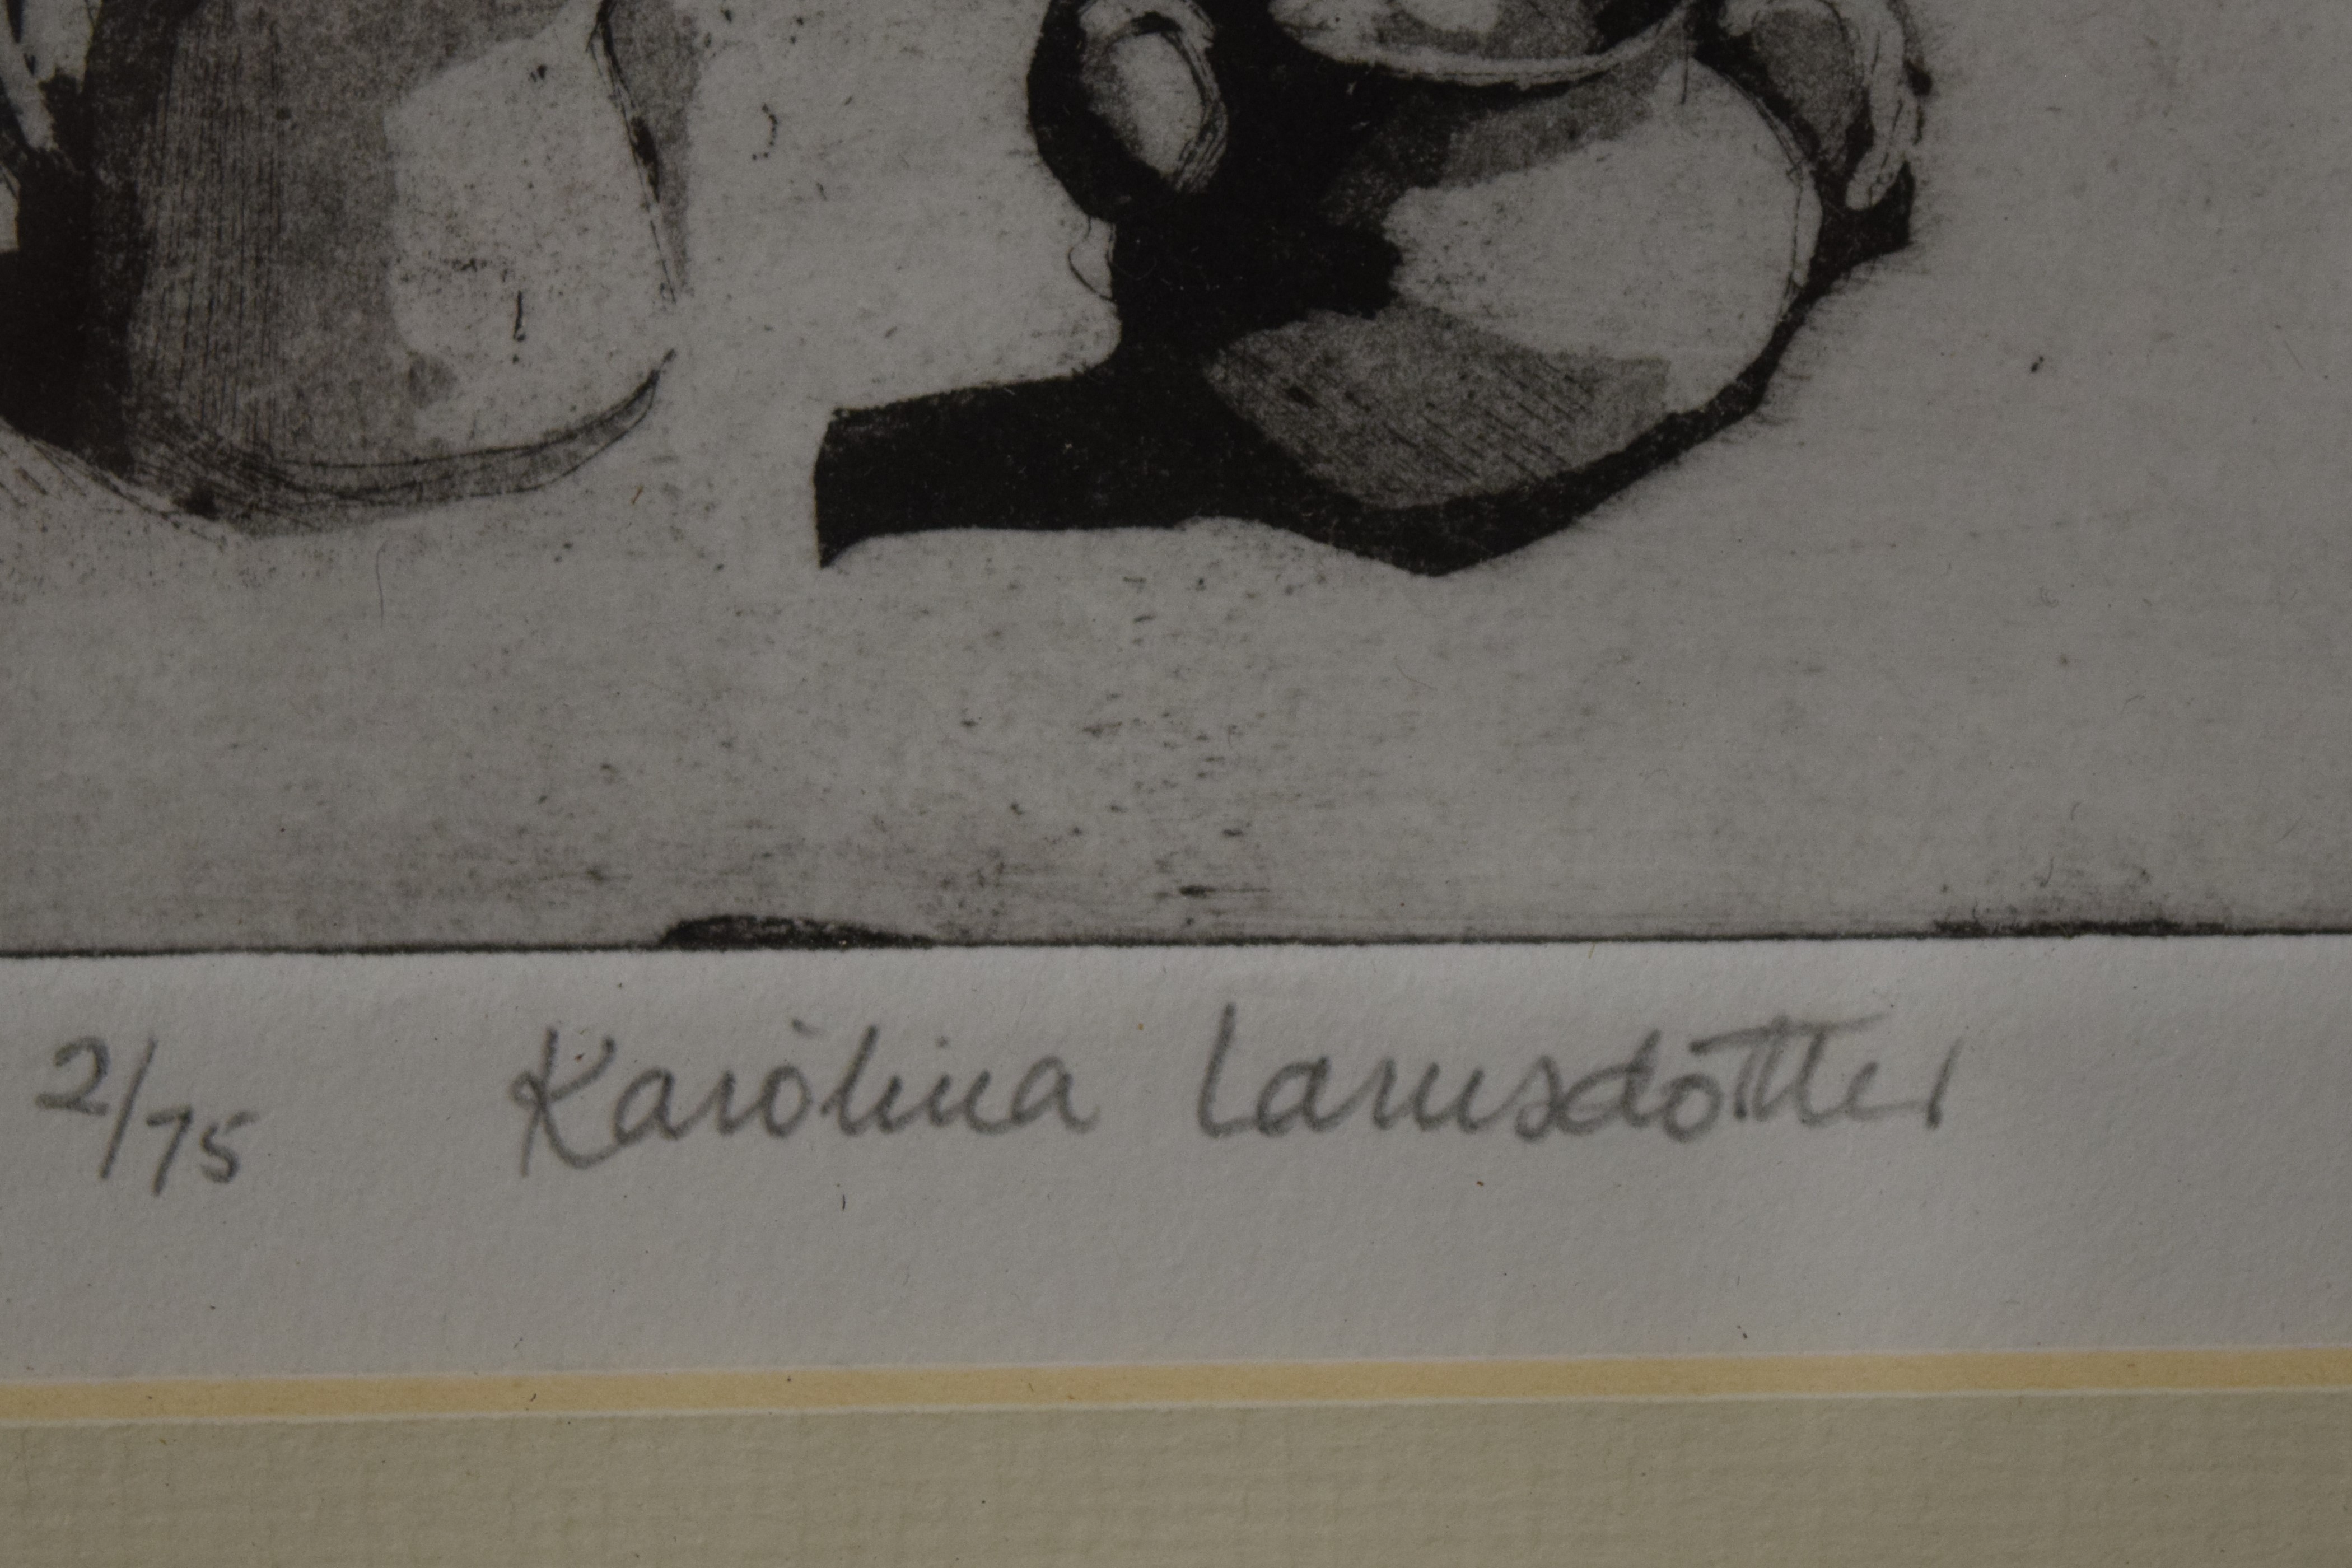 KAROLINA LARUSDOTTIR (1944-2019) Iceland, They had a Slice of Chocolate Cake Each, - Image 3 of 4